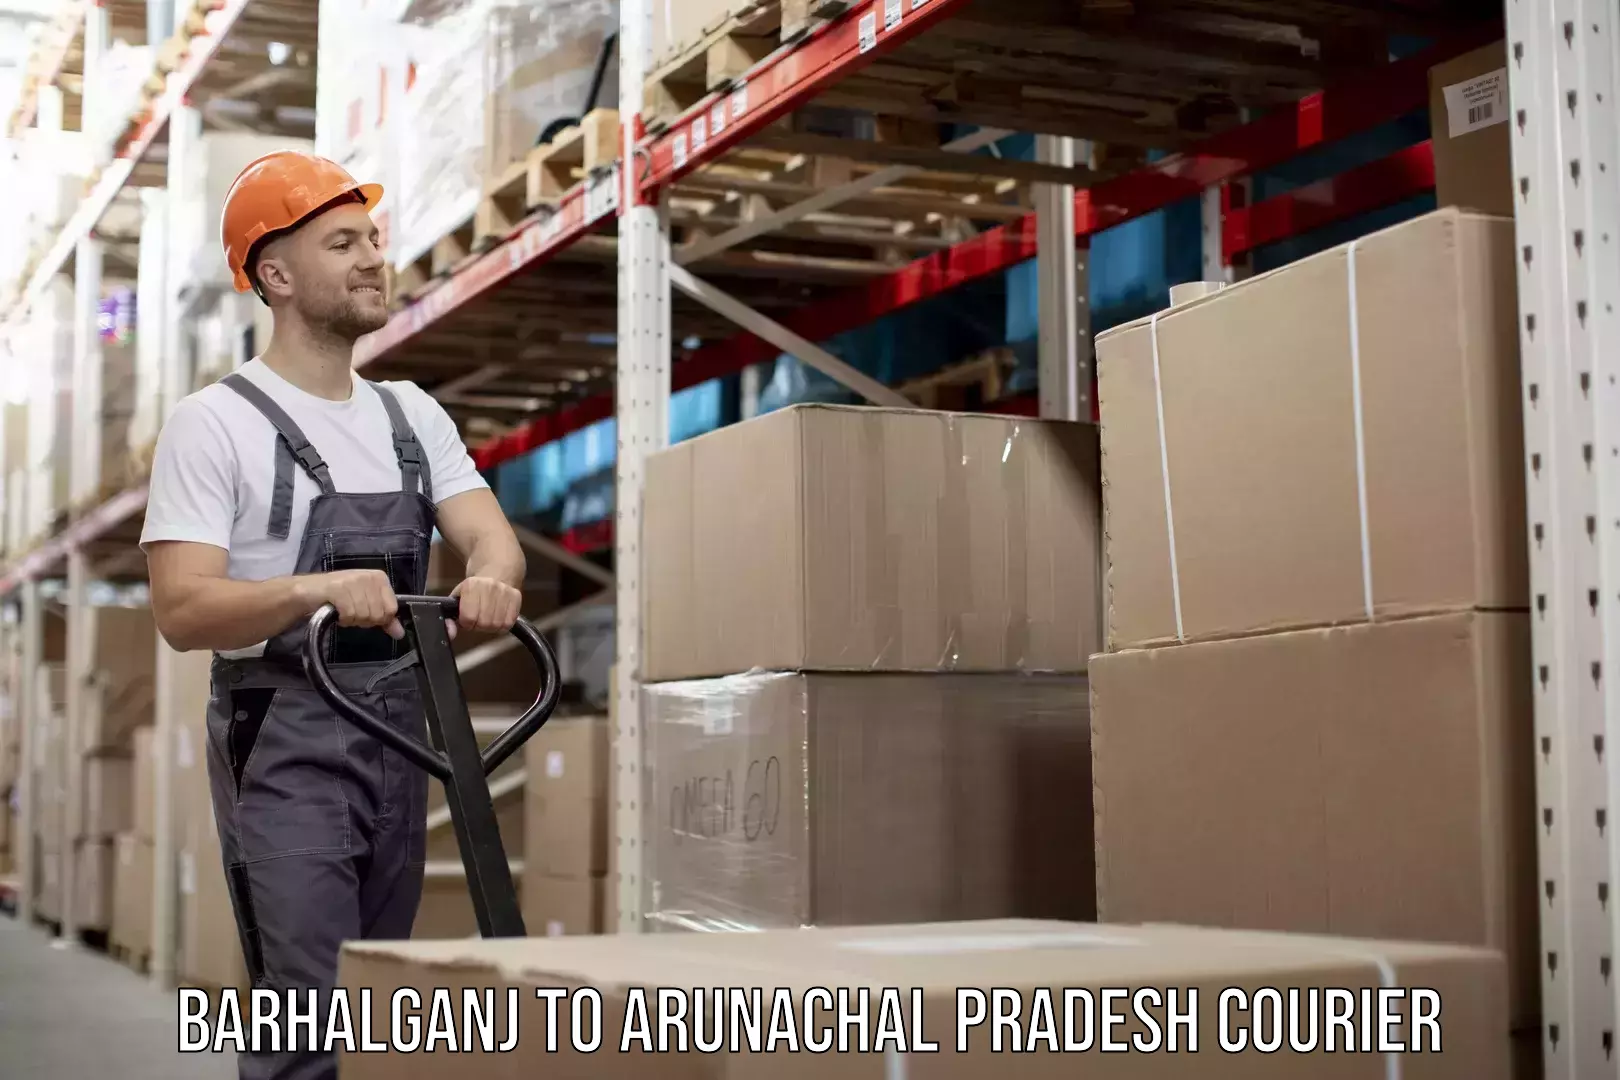 User-friendly delivery service Barhalganj to Arunachal Pradesh